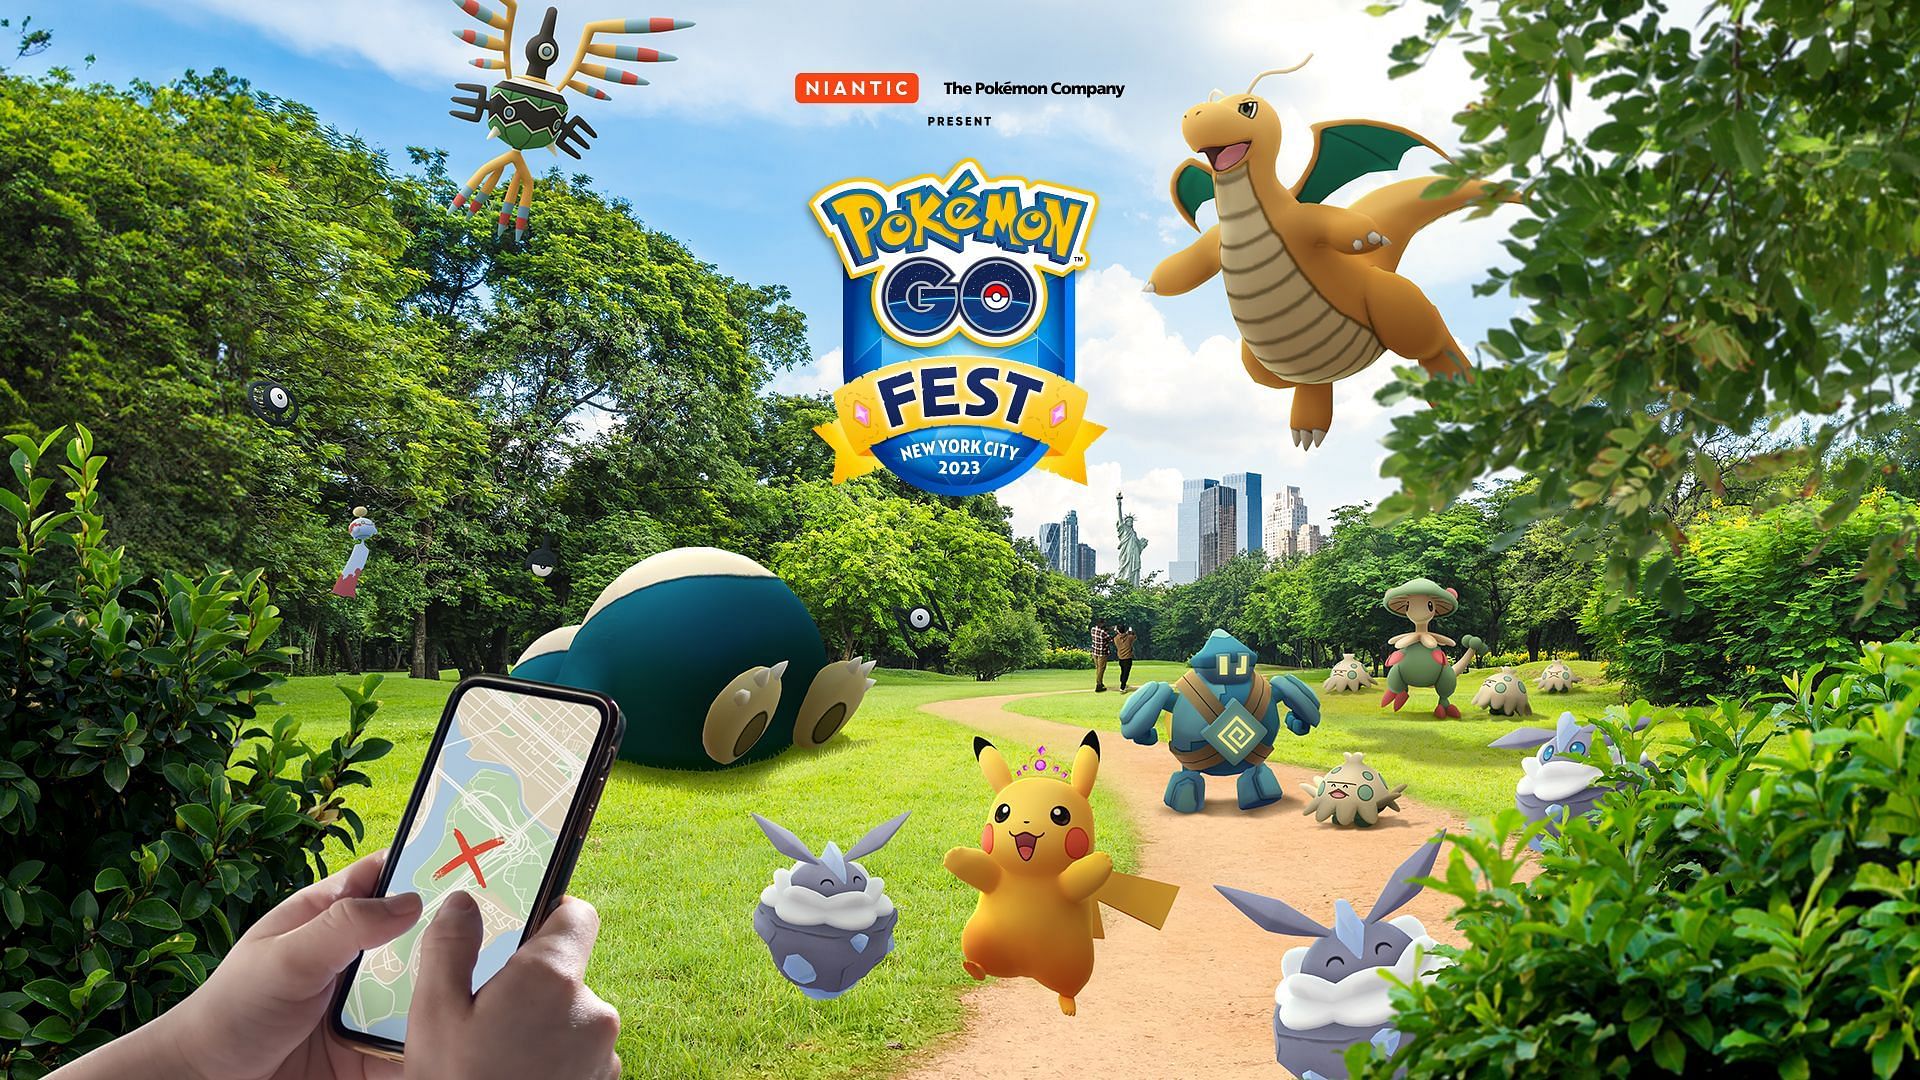 Pokémon Go's upcoming Hoenn Tour marks a big change to paid events